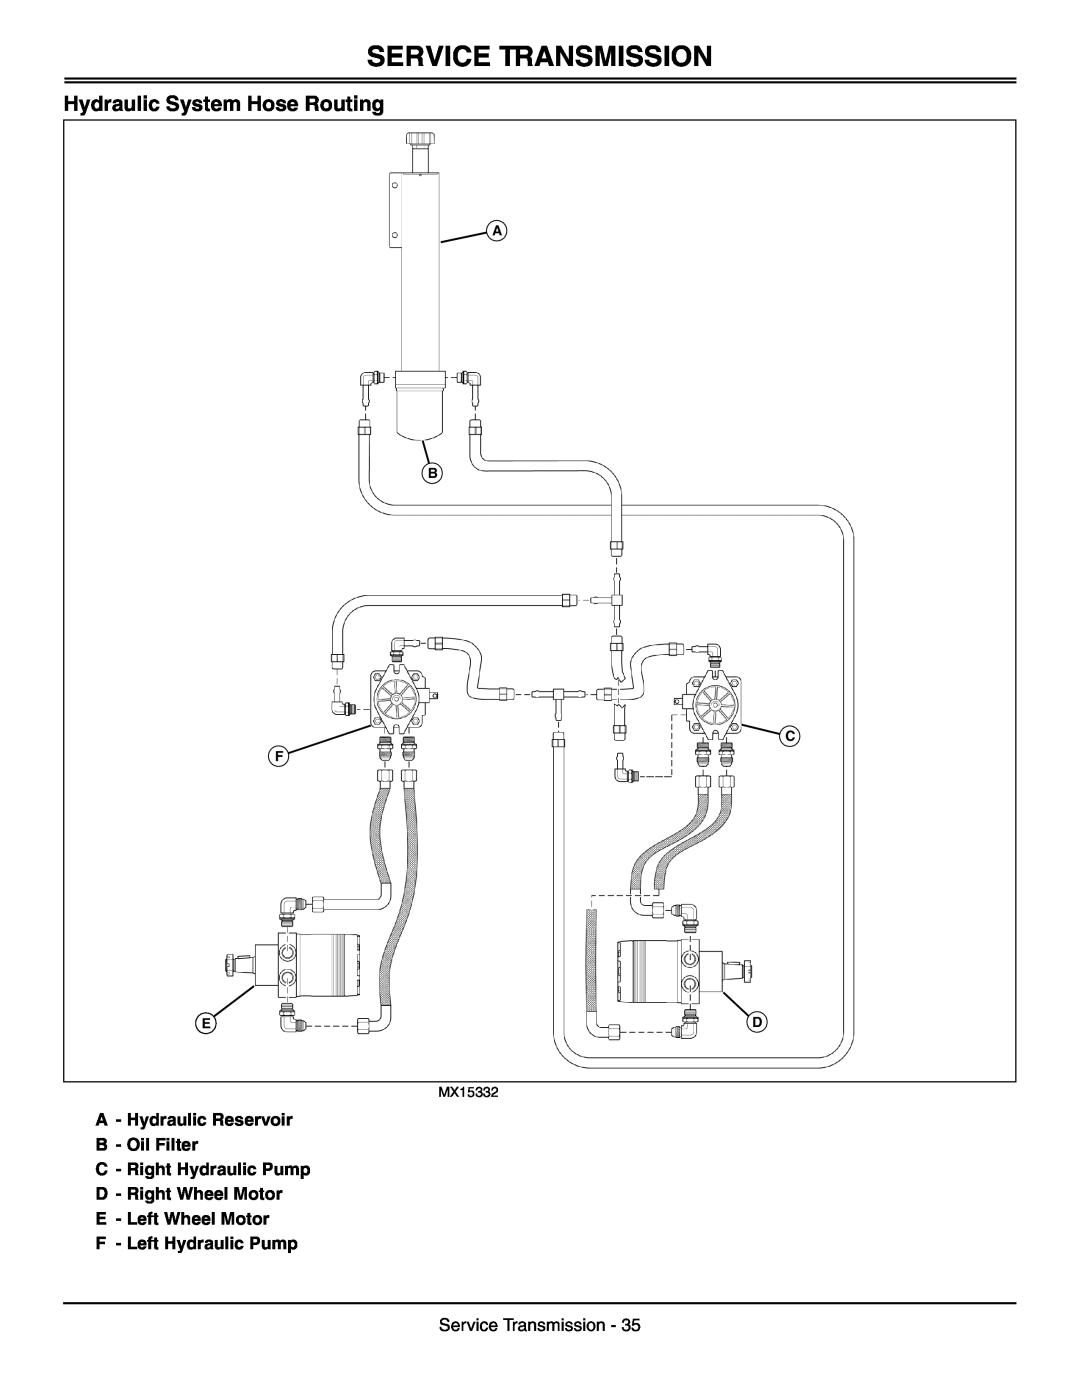 Great Dane GDRZ61-26KHE, GDRZ72-27KHE, GDRZ61-25KAE manual Hydraulic System Hose Routing, Service Transmission, A B C F Ed 